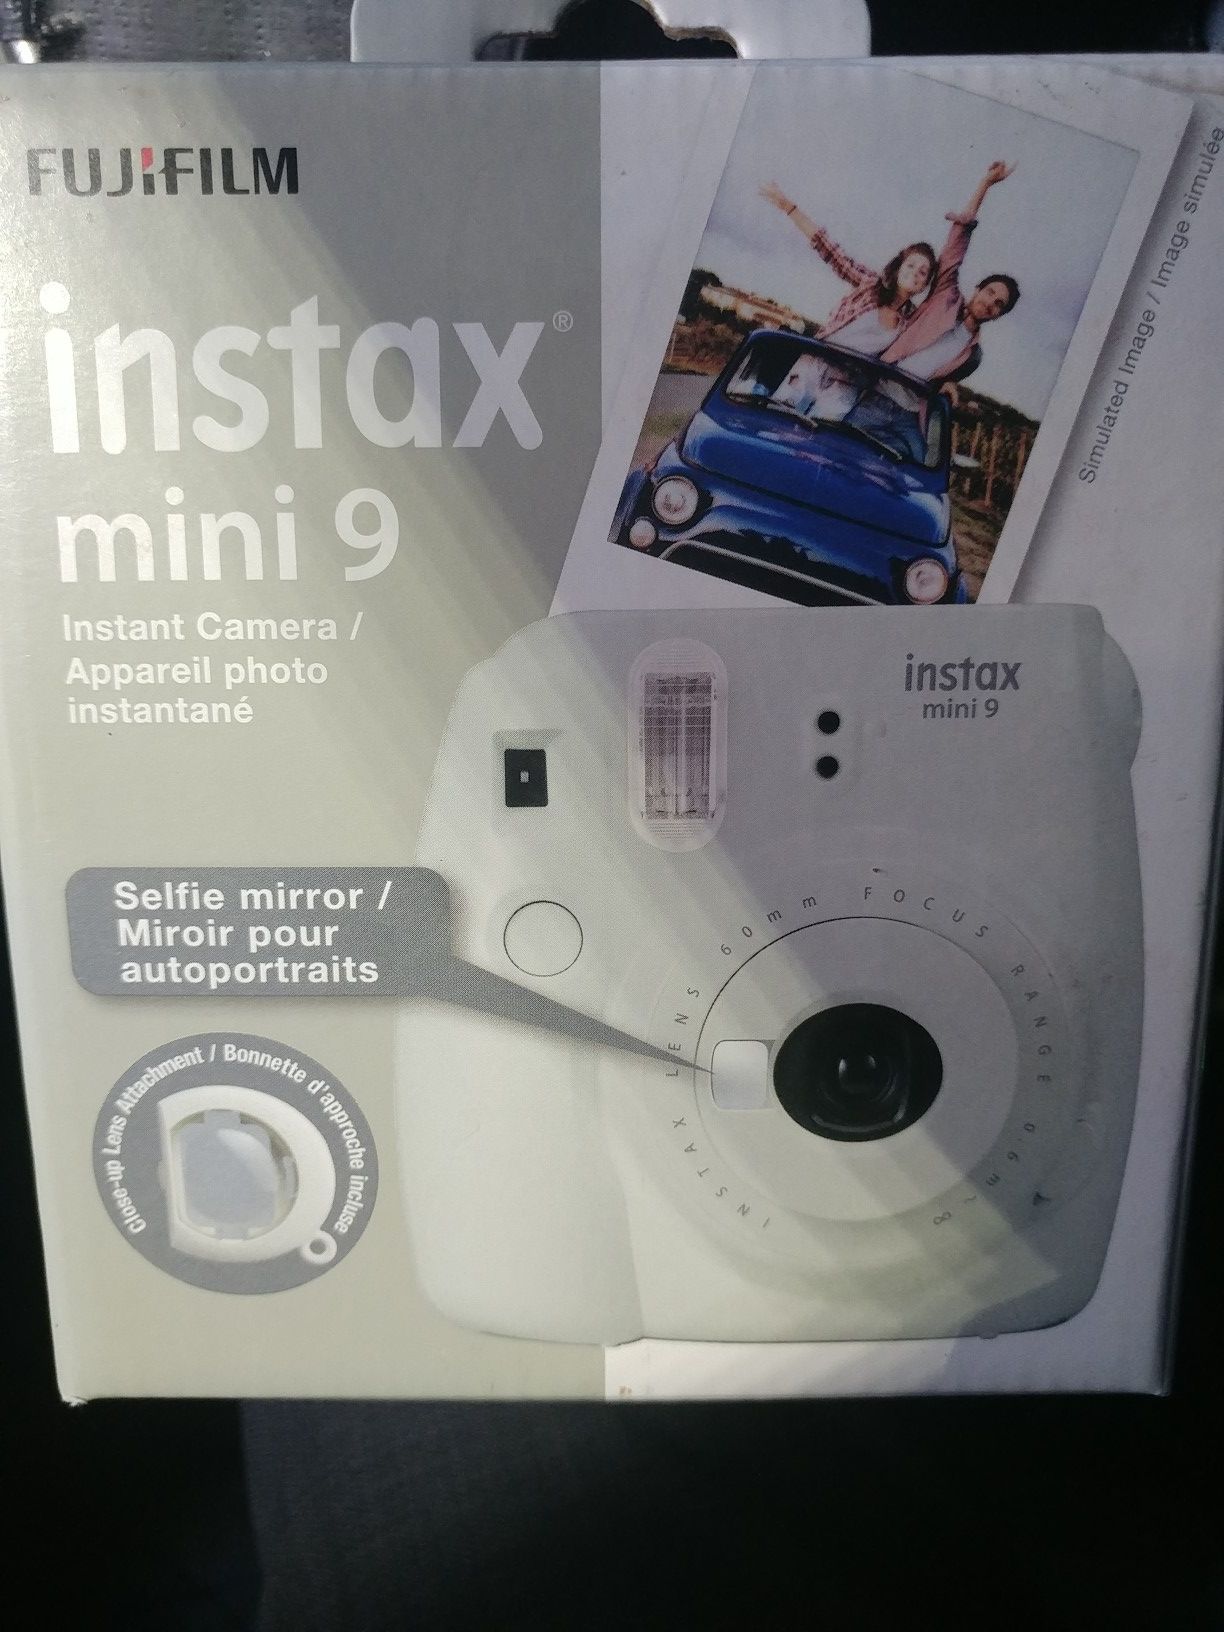 Fujfilm instax mini 9 camera